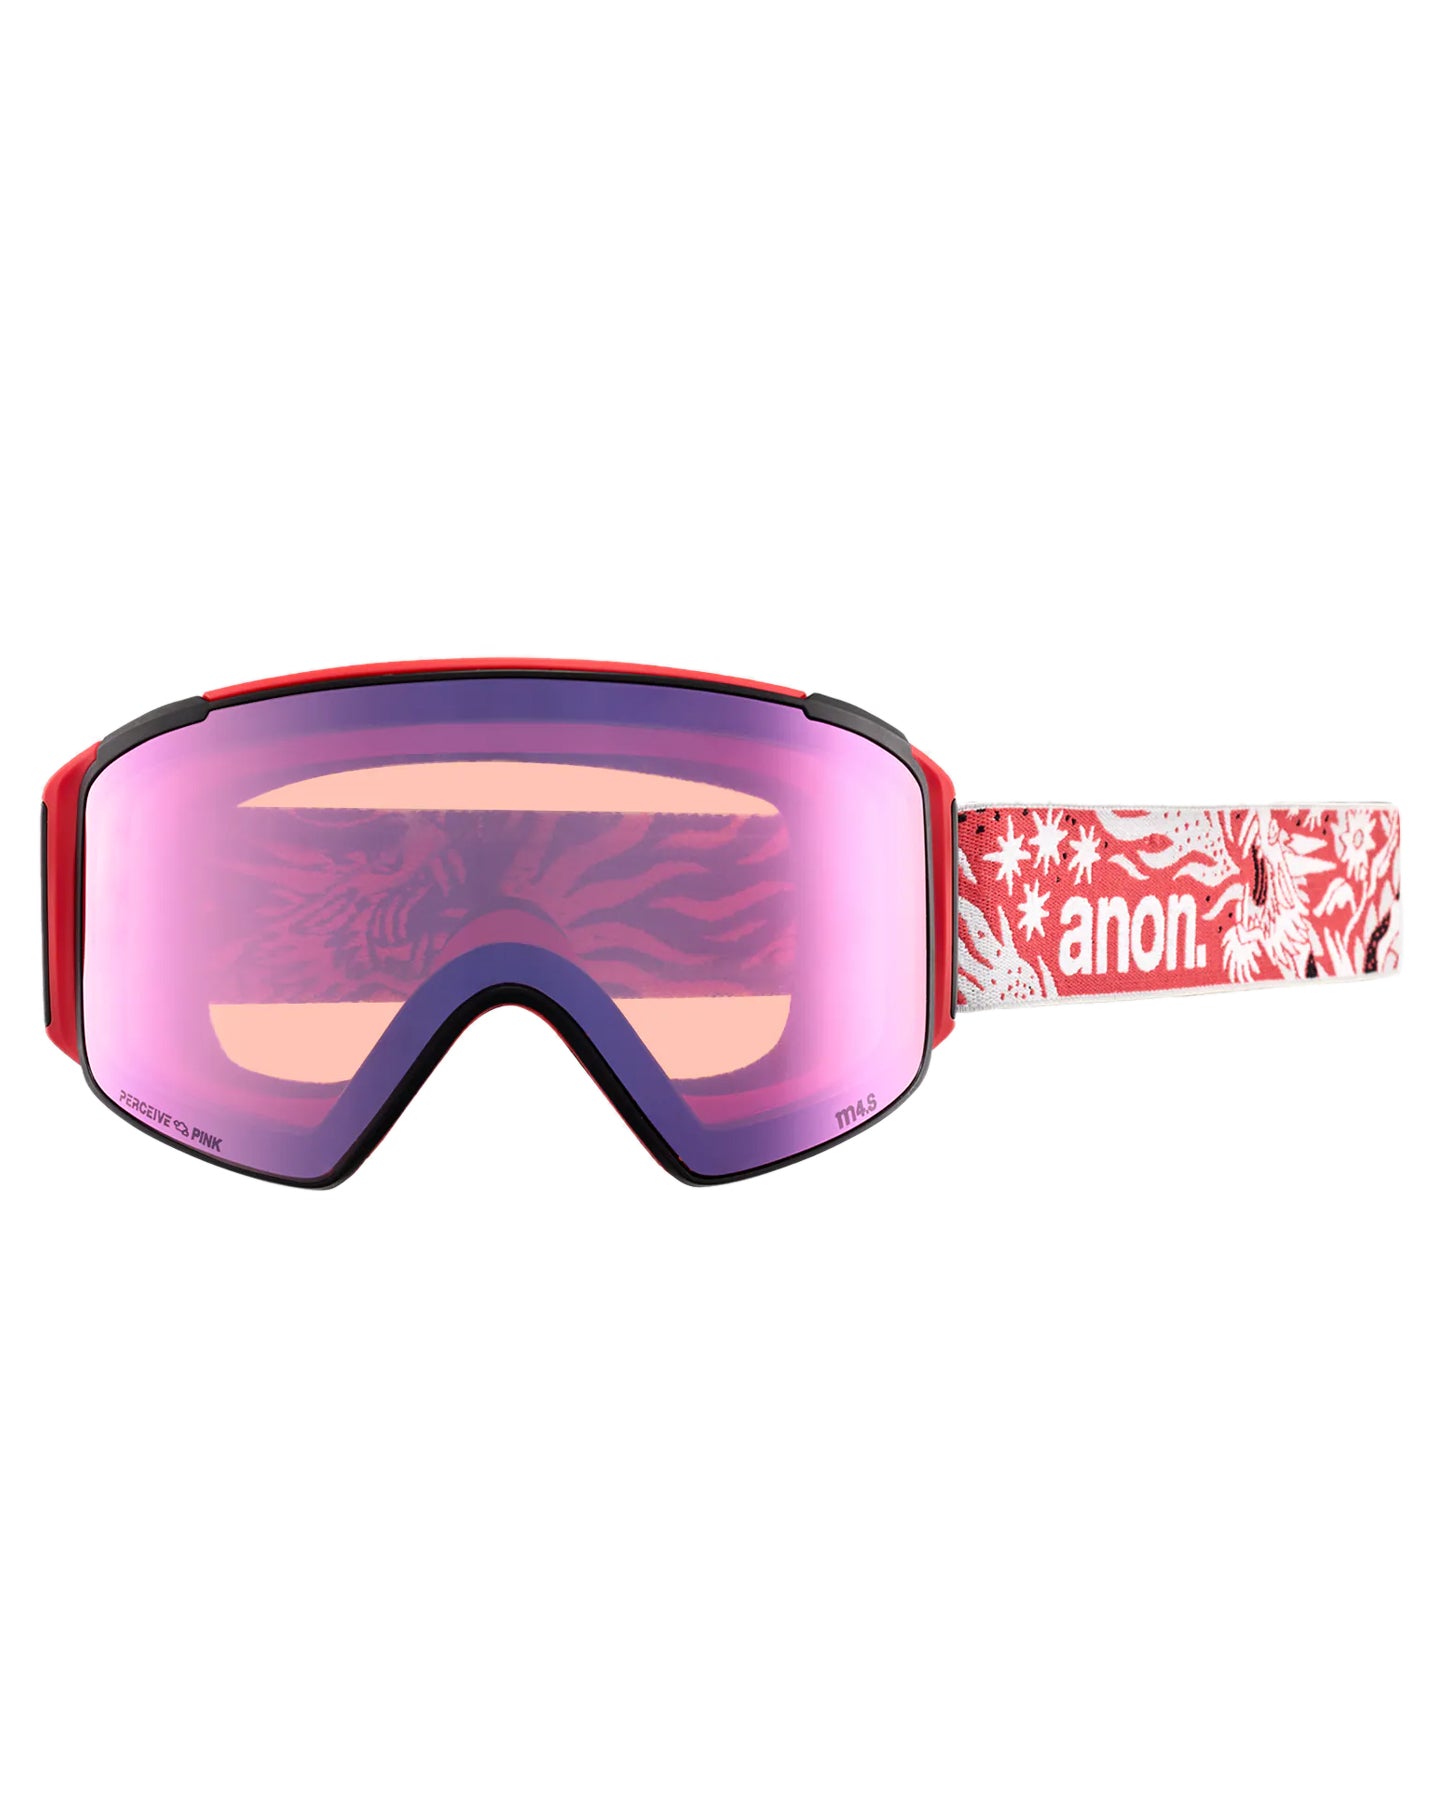 Anon M4S Cylindrical Snow Goggles + Bonus Lens + Mfi® Face Mask - Joshua Noom/Perceive Variable Blue Lens Men's Snow Goggles - Trojan Wake Ski Snow